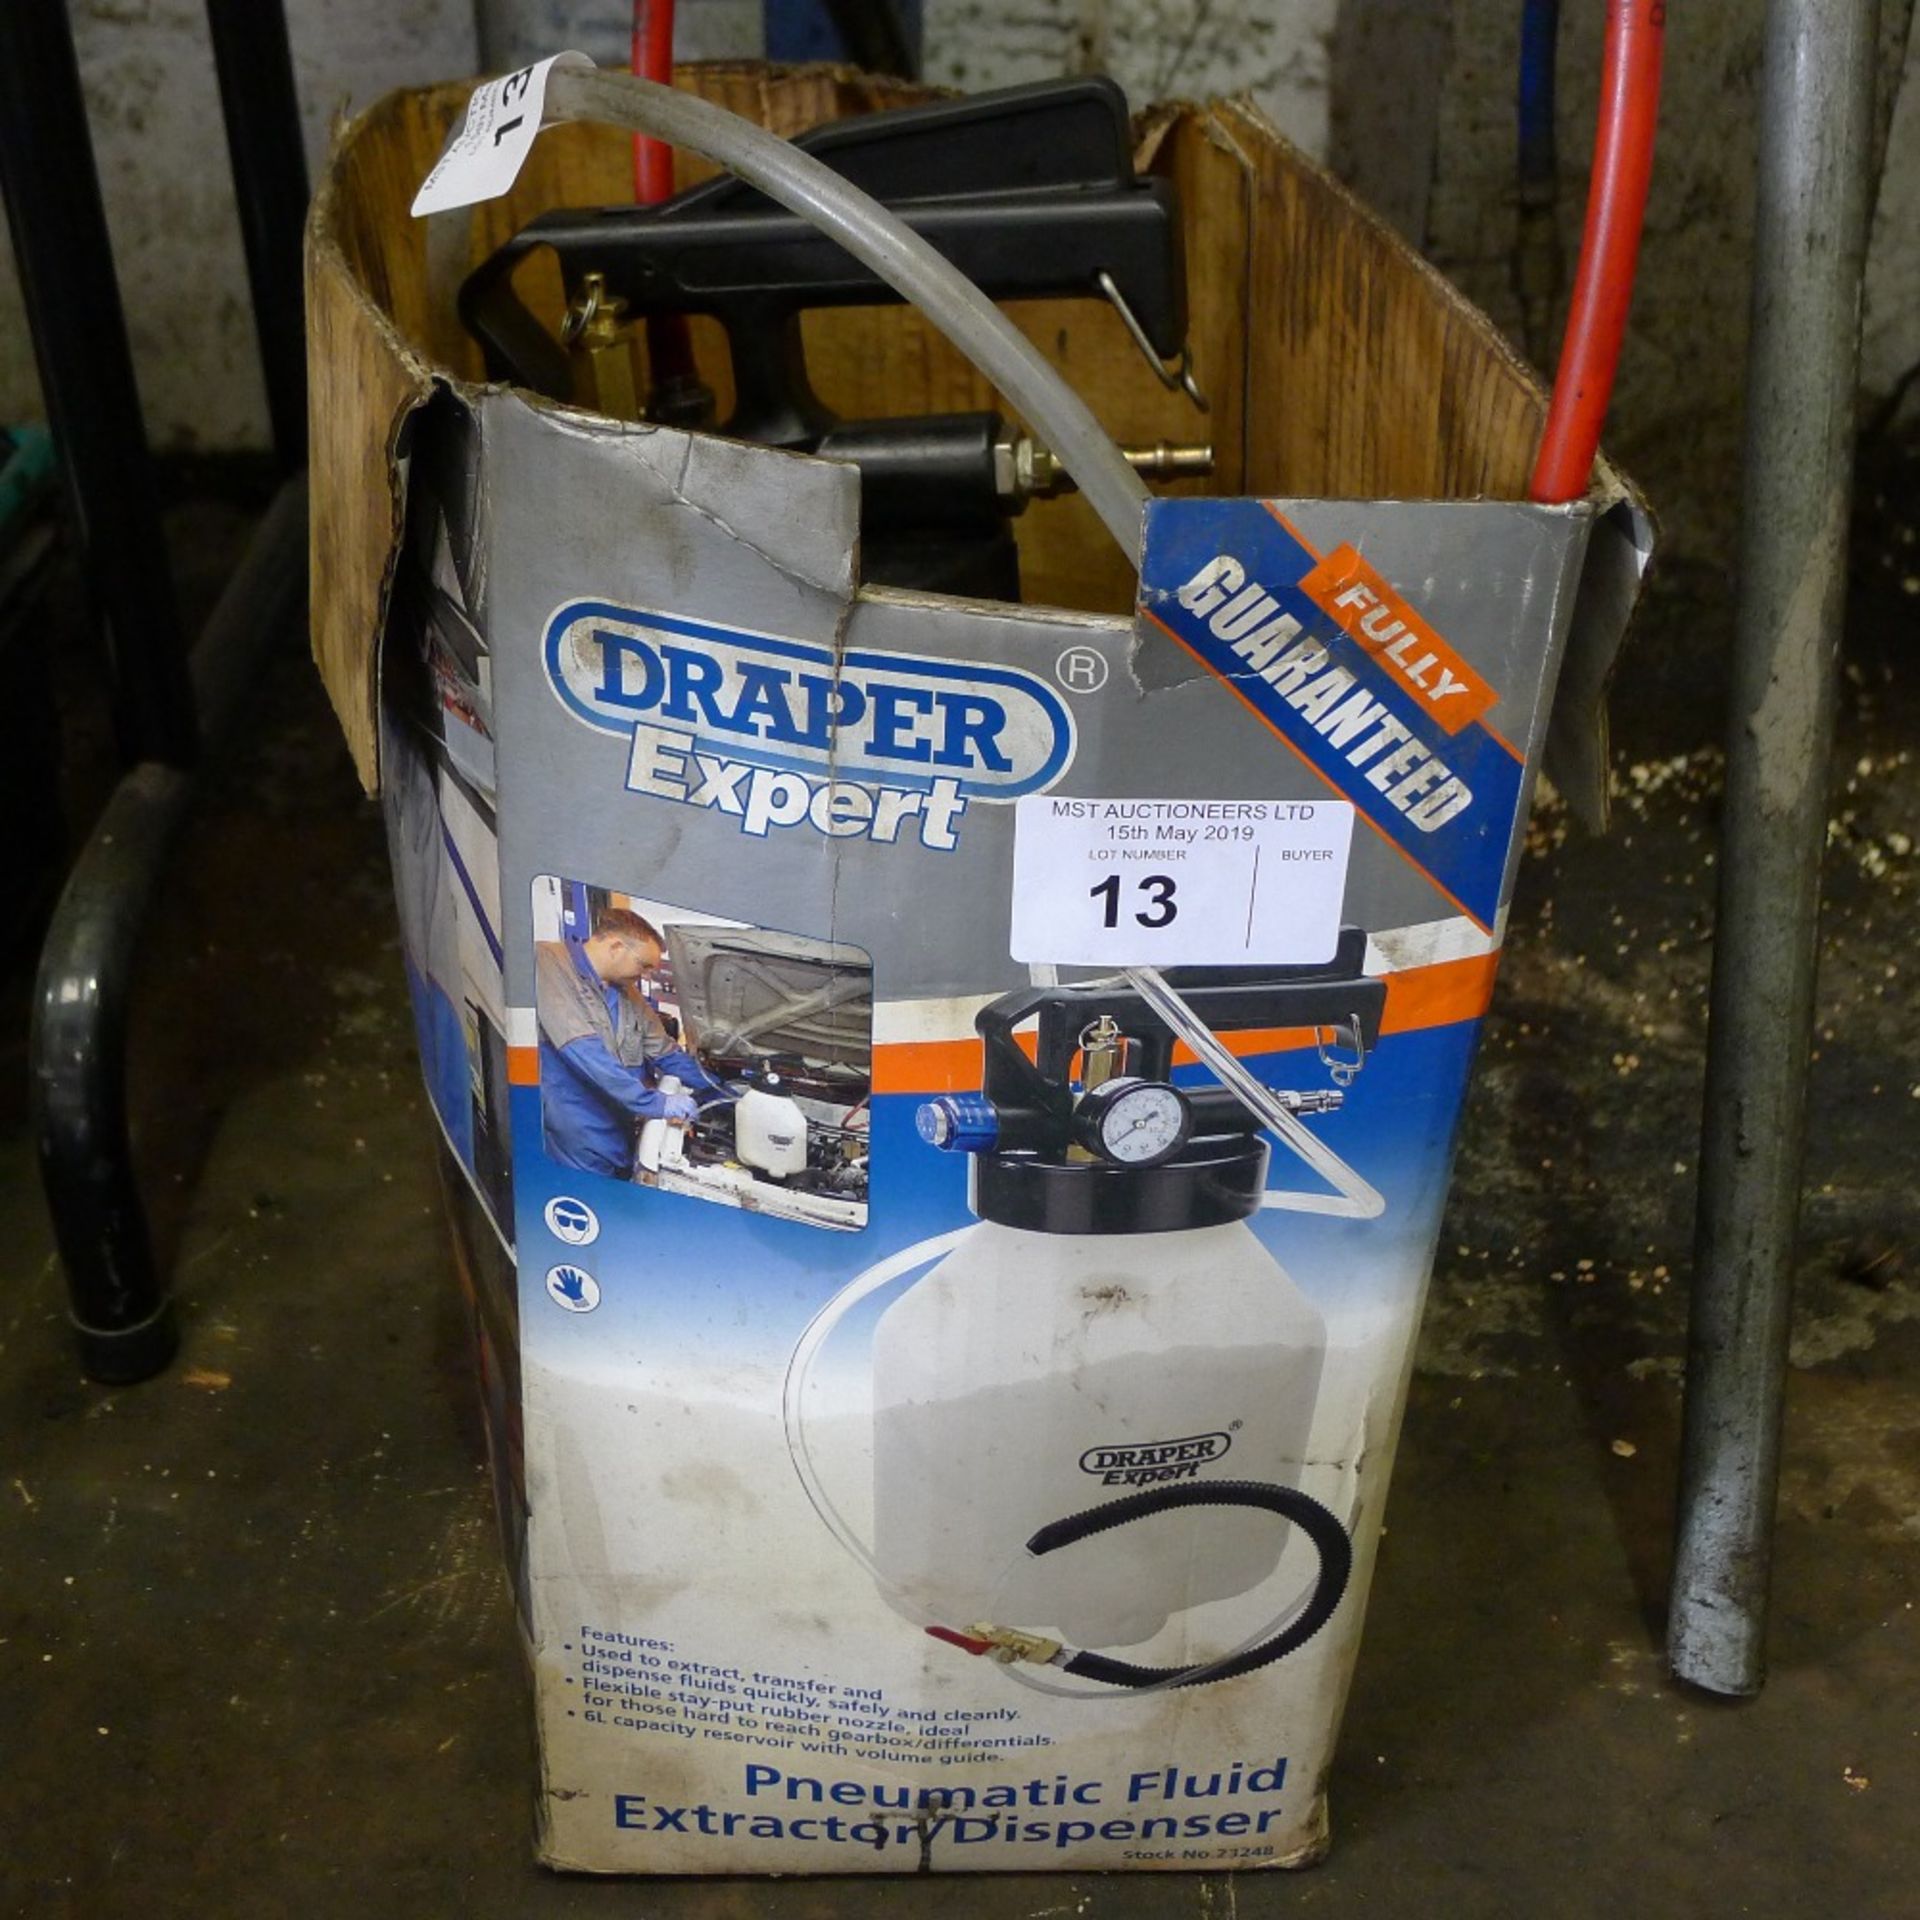 1 Draper pneumatic fluid extractor / dispenser type 23248